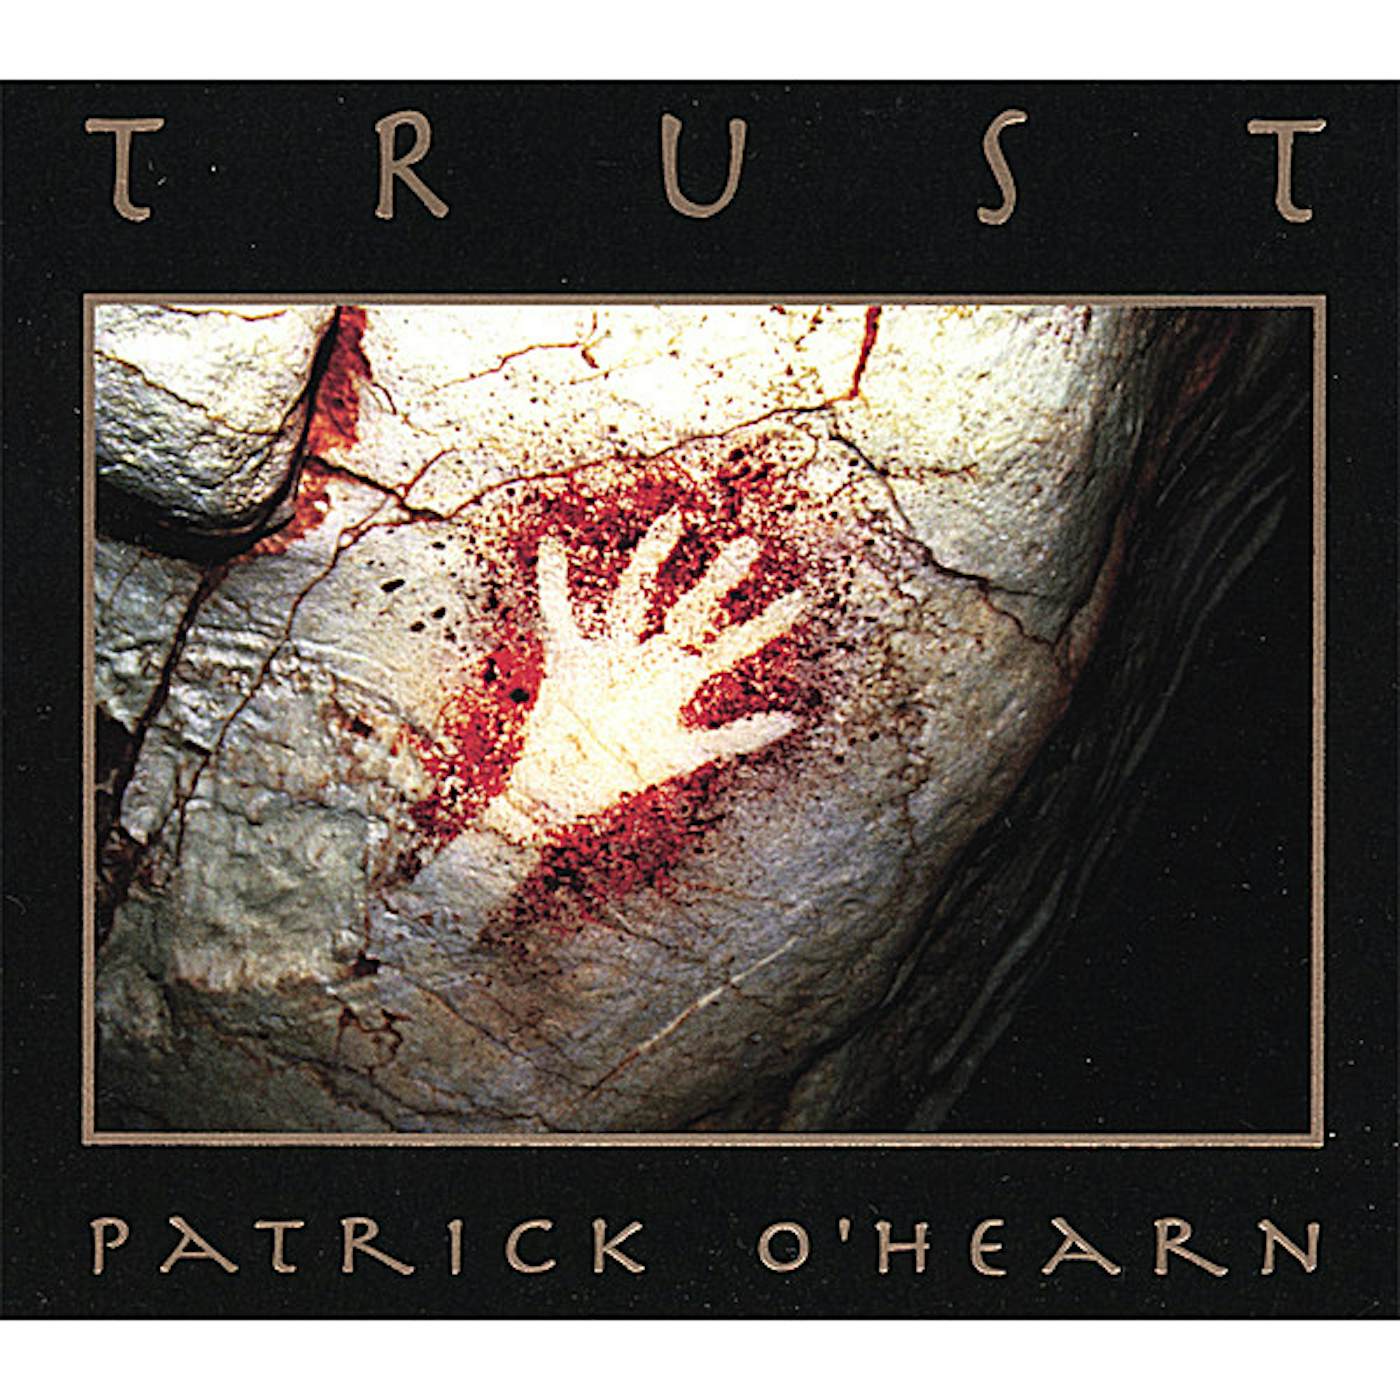 Patrick O'Hearn TRUST CD